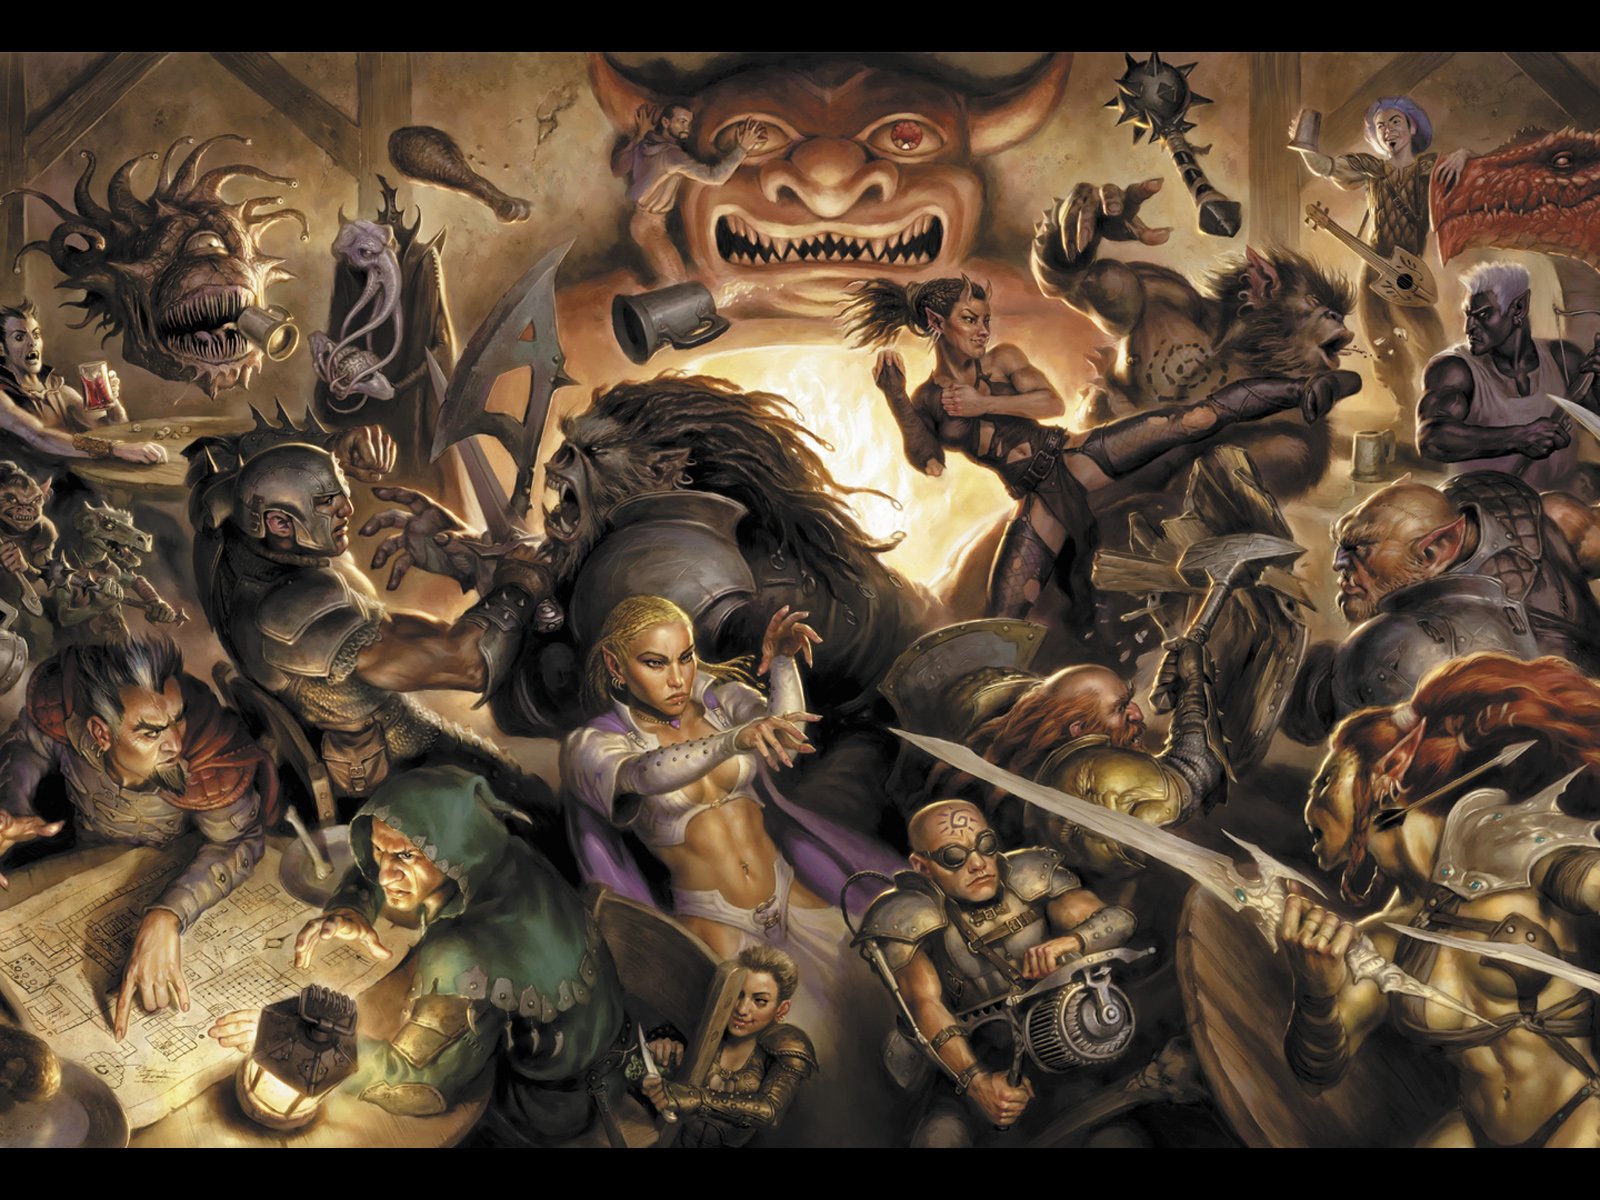 Fantasy-themed desktop wallpaper D&D fans will love - reminiscent of mysterious dungeons.